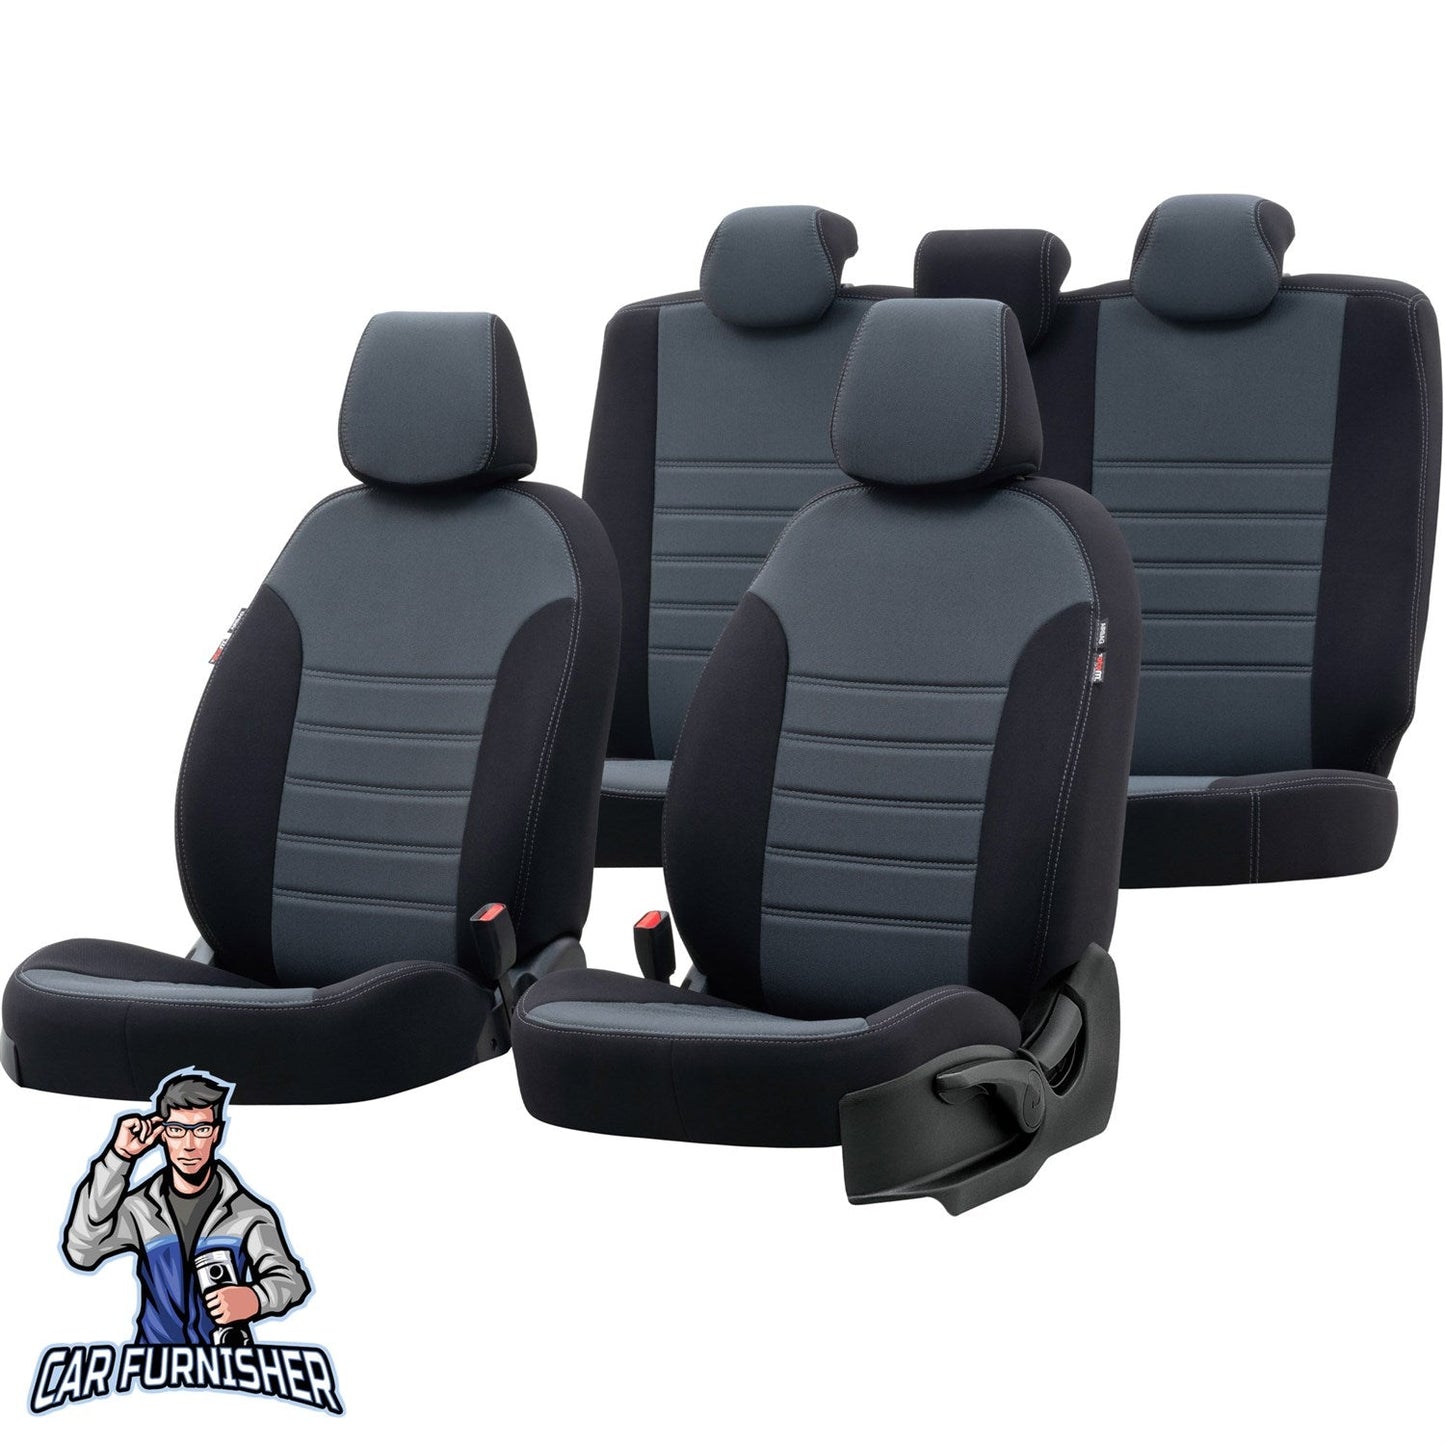 Volkswagen Jetta Seat Cover Original Jacquard Design Smoked Black Jacquard Fabric